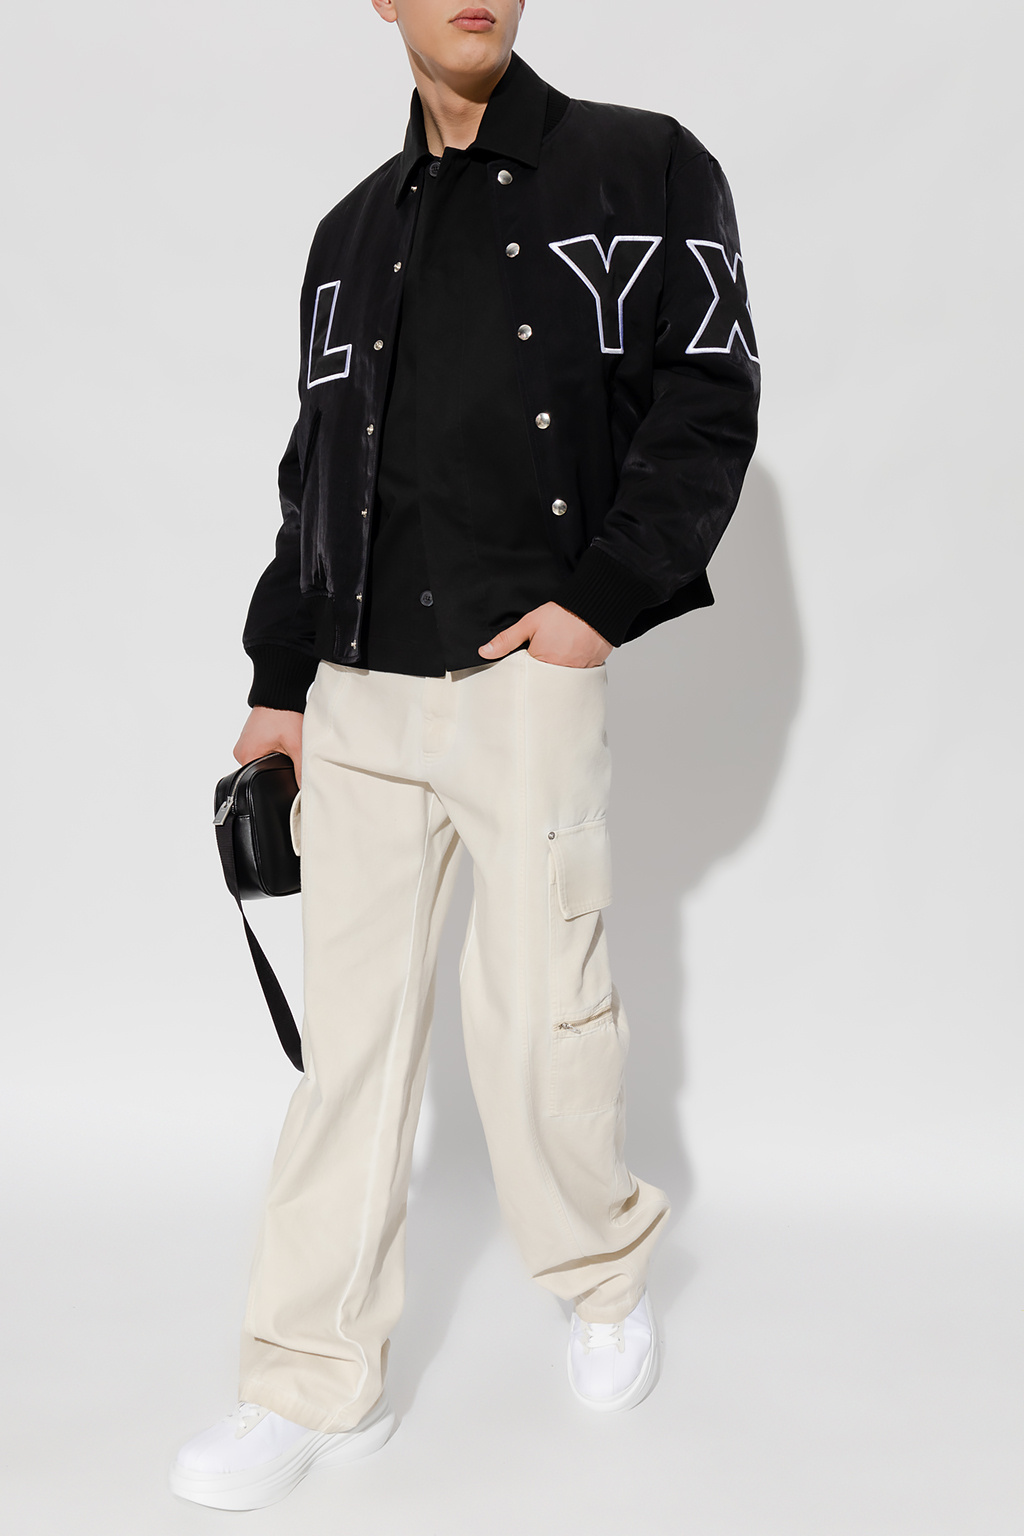 Black Bomber jacket 1017 ALYX 9SM - Longline-cuff Cashmere Sweater